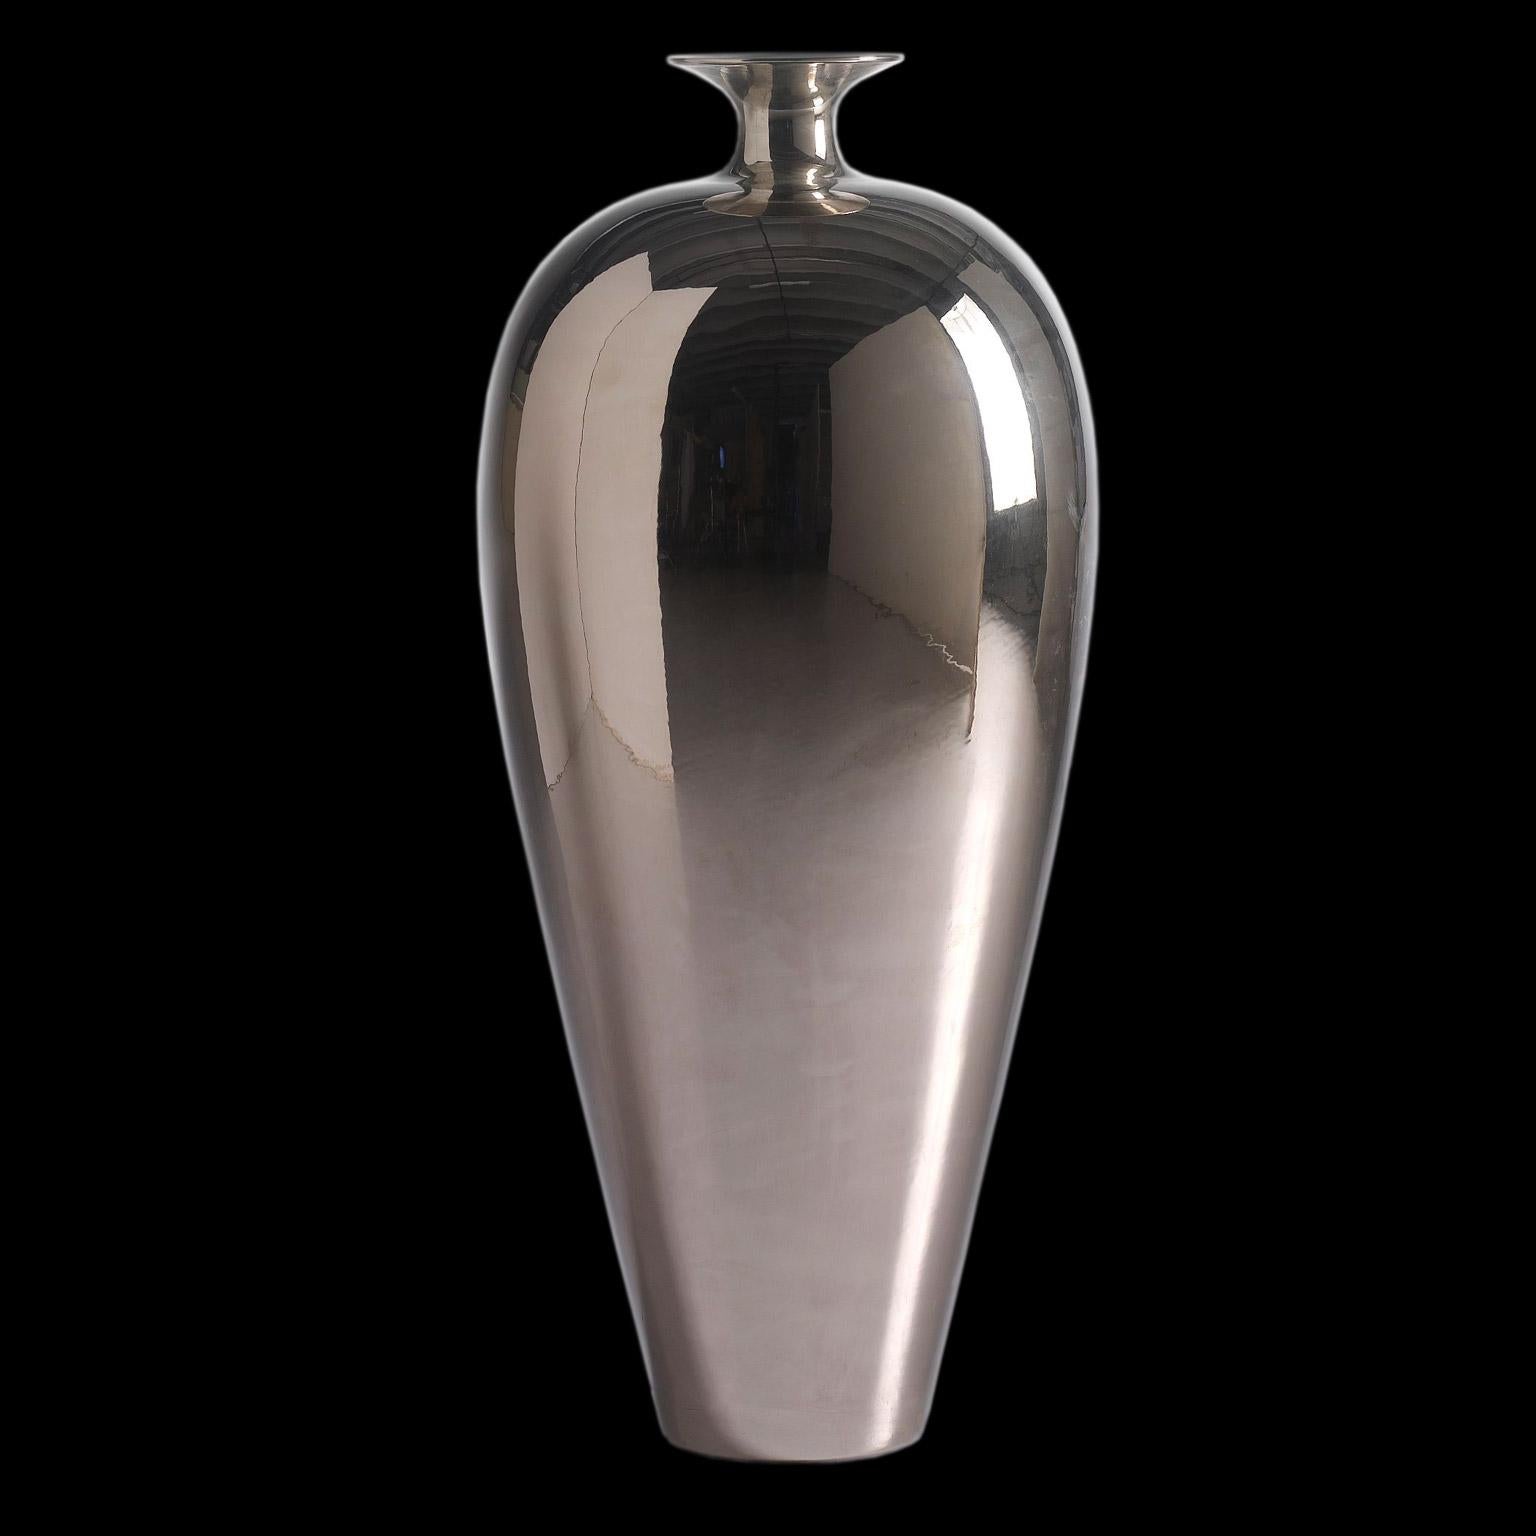 Ceramic vase DOLLY 
cod. BD001 
handcrafted in platinum 

measures: 
H. 95.0 cm.
Dm. 42.0 cm.